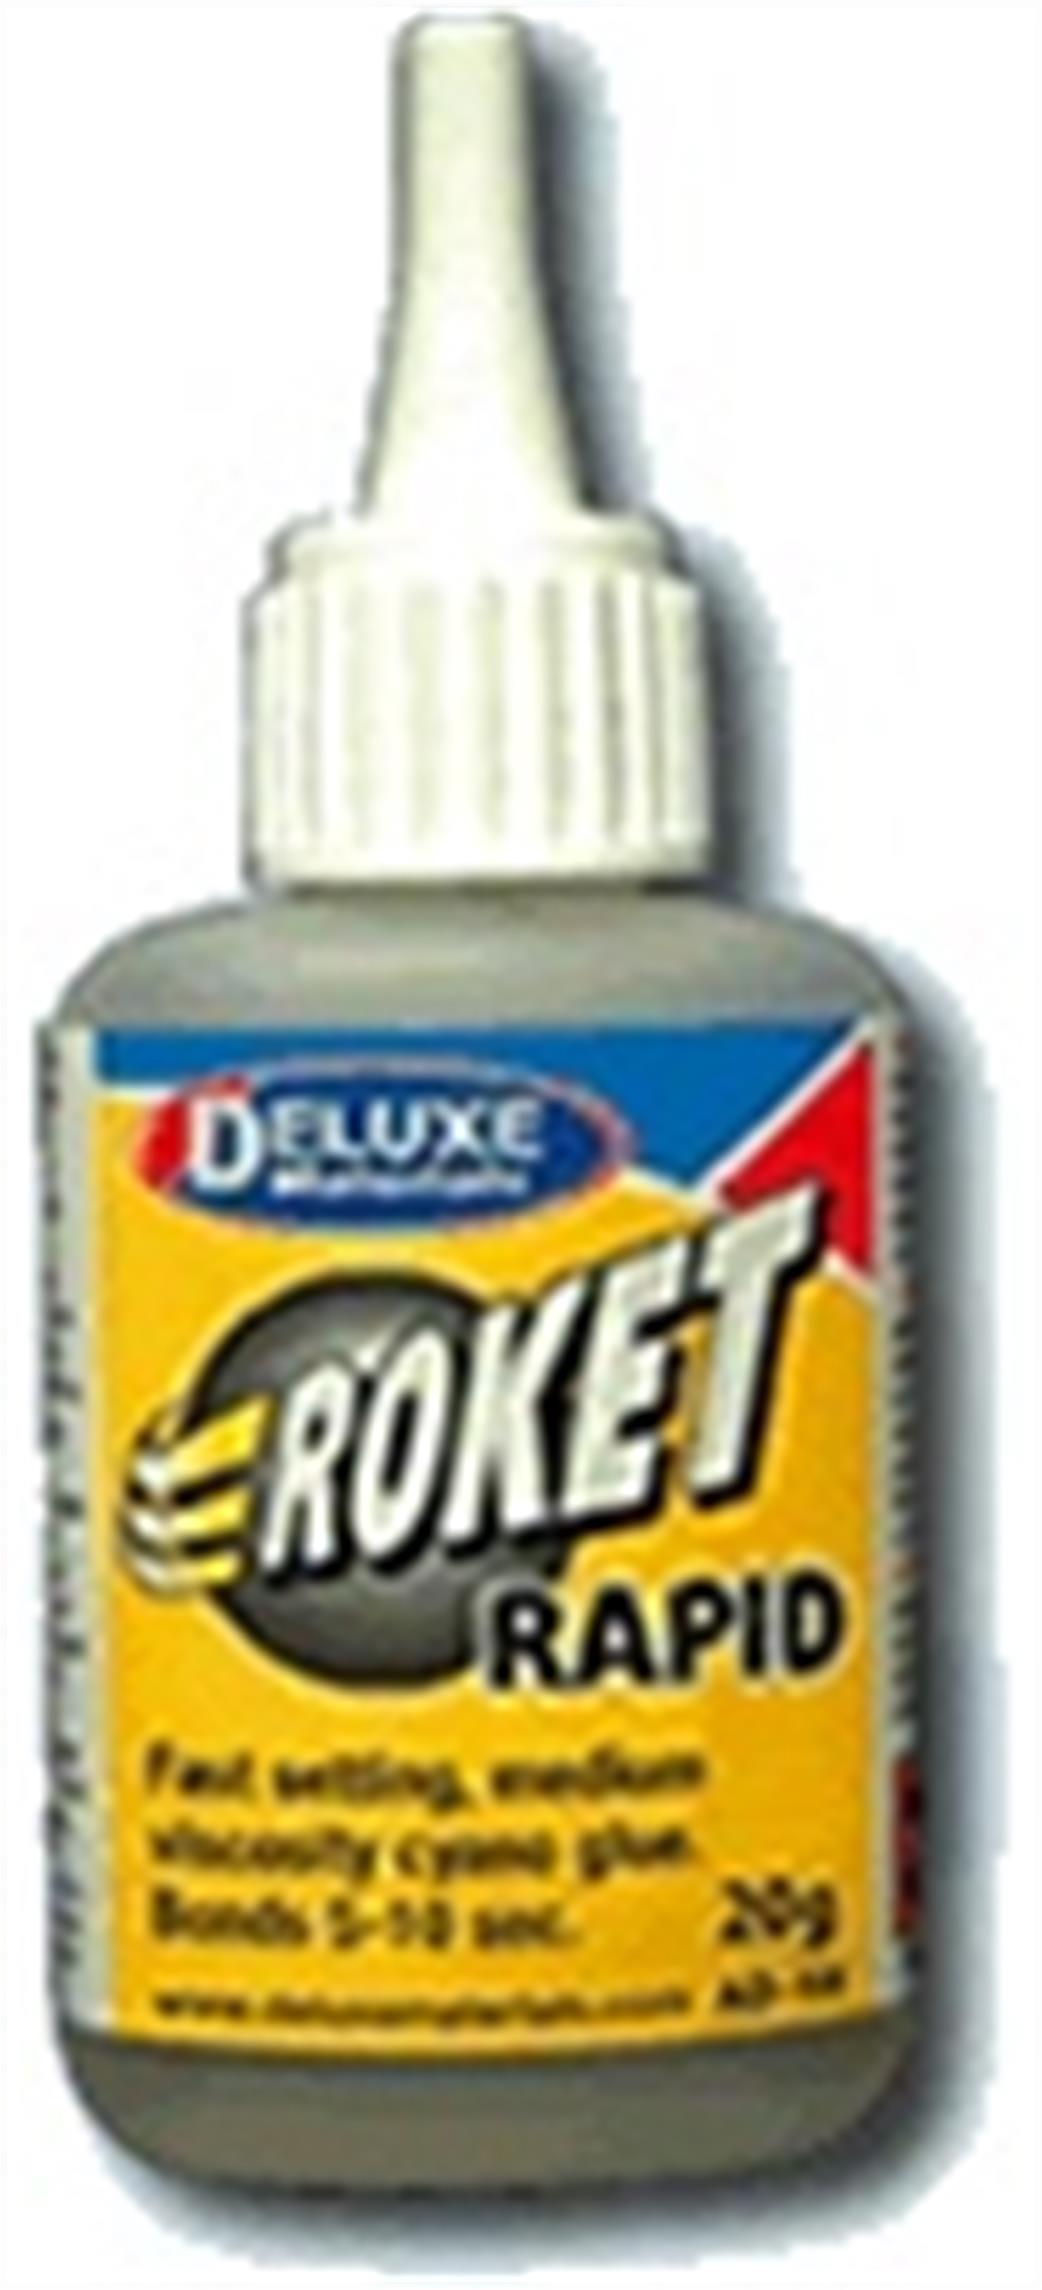 Deluxe Materials  AD44 Roket Rapid Cyano Super Glue 20g